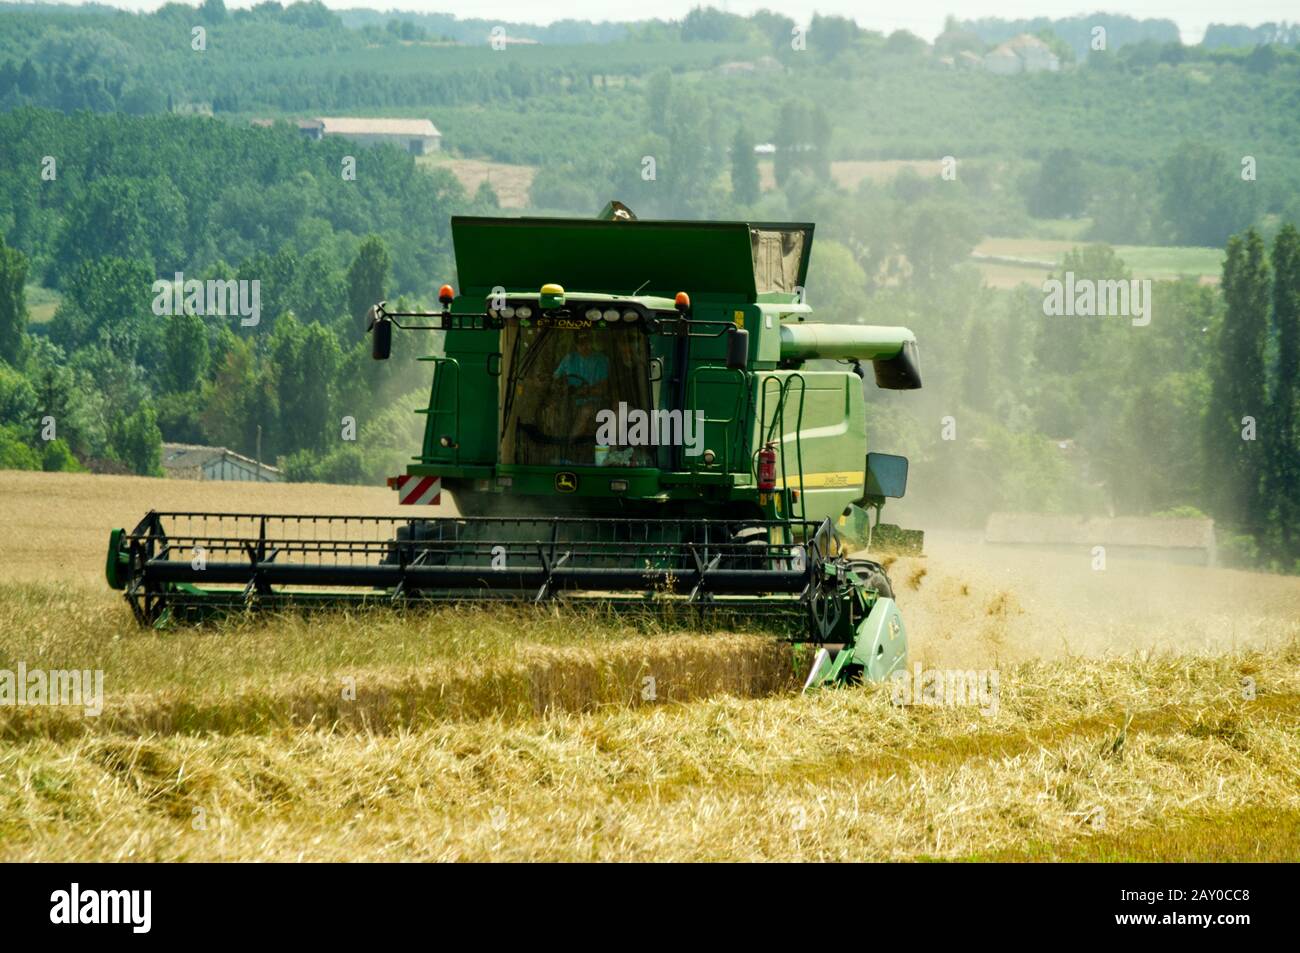 Harvesting wheat near Duras, Lot-et-Garonne, France with a John Deere T670 Hillmaster combine harvester. Stock Photo